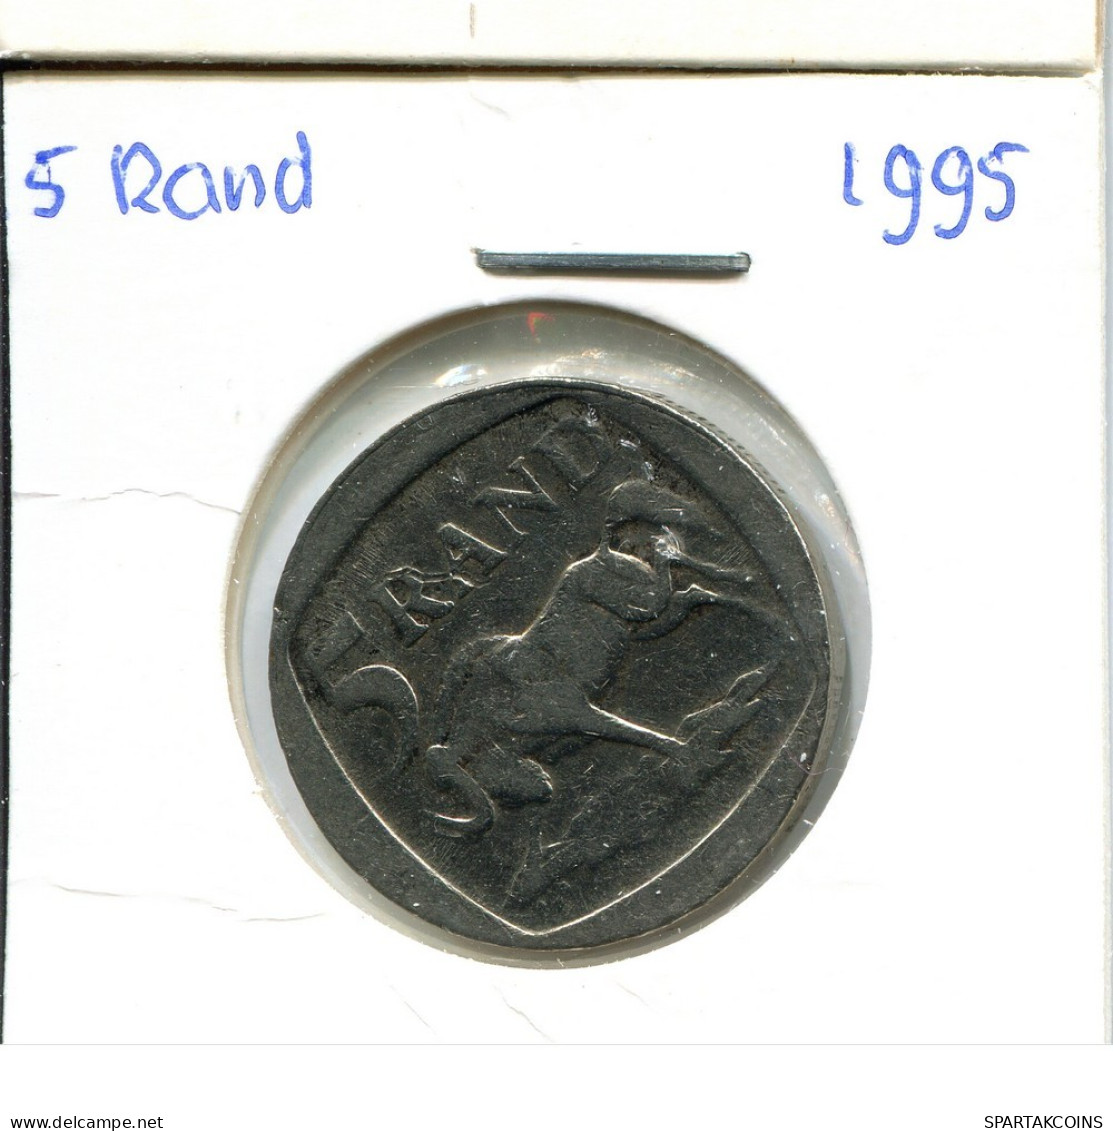 5 RAND 1995 SOUTH AFRICA Coin #AT166.U.A - Südafrika